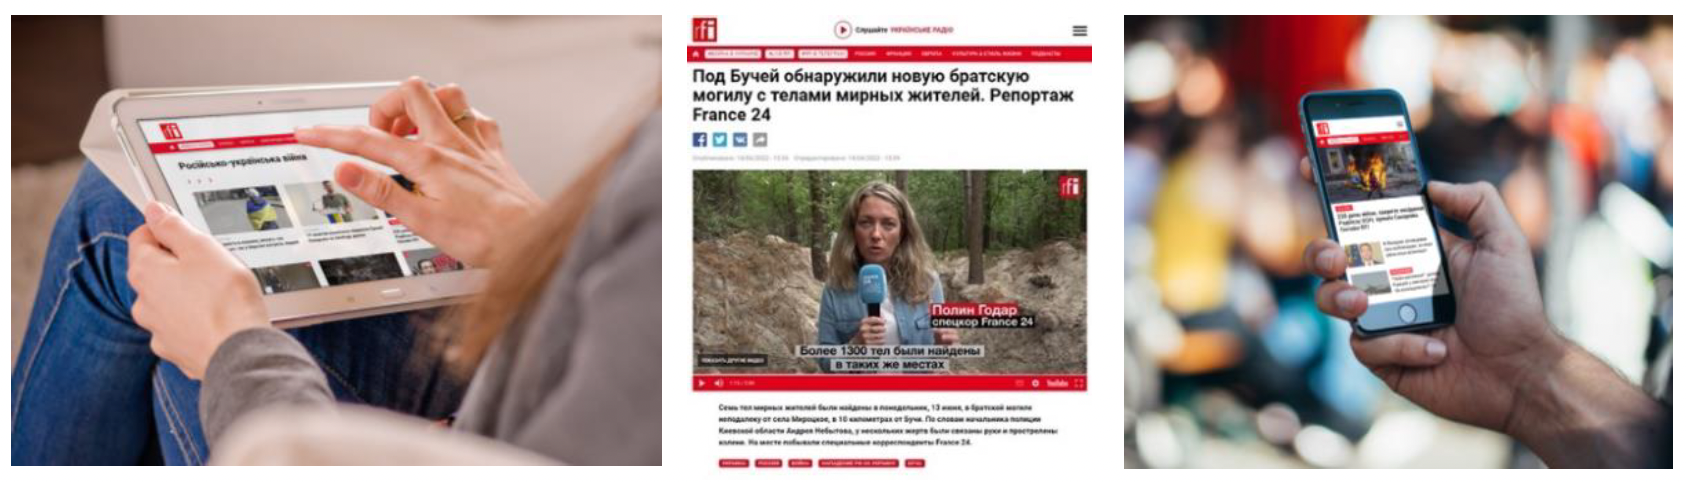 RFI lance son offre d’information en ukrainien